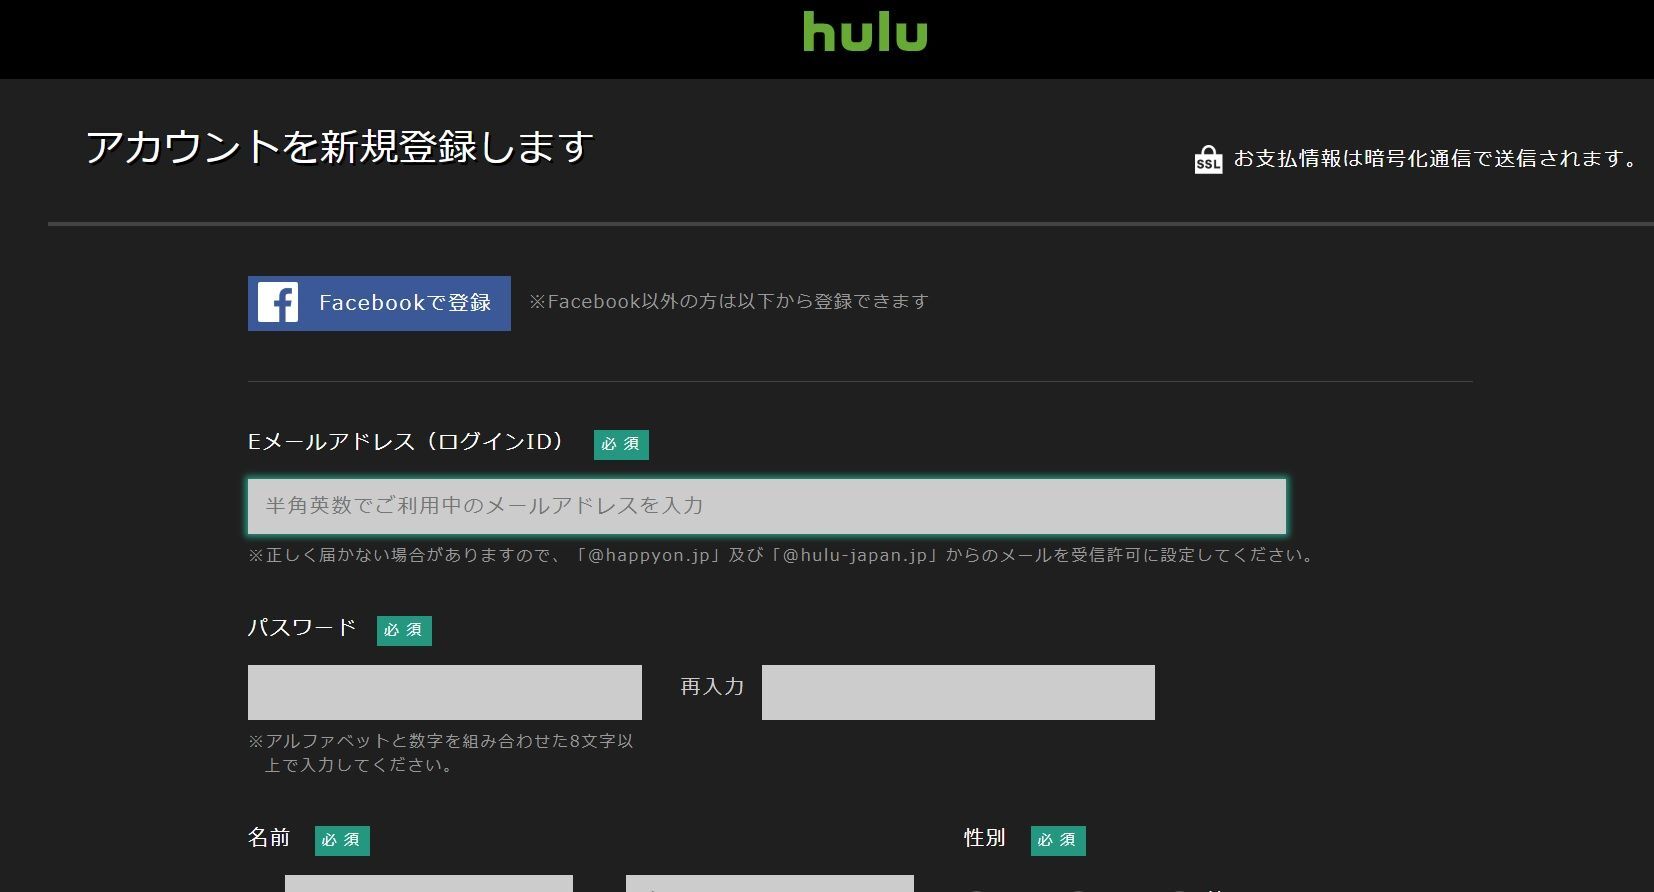 Huluの無料トライアルはいつまで 登録と解約方法も解説 暮らしニスタ